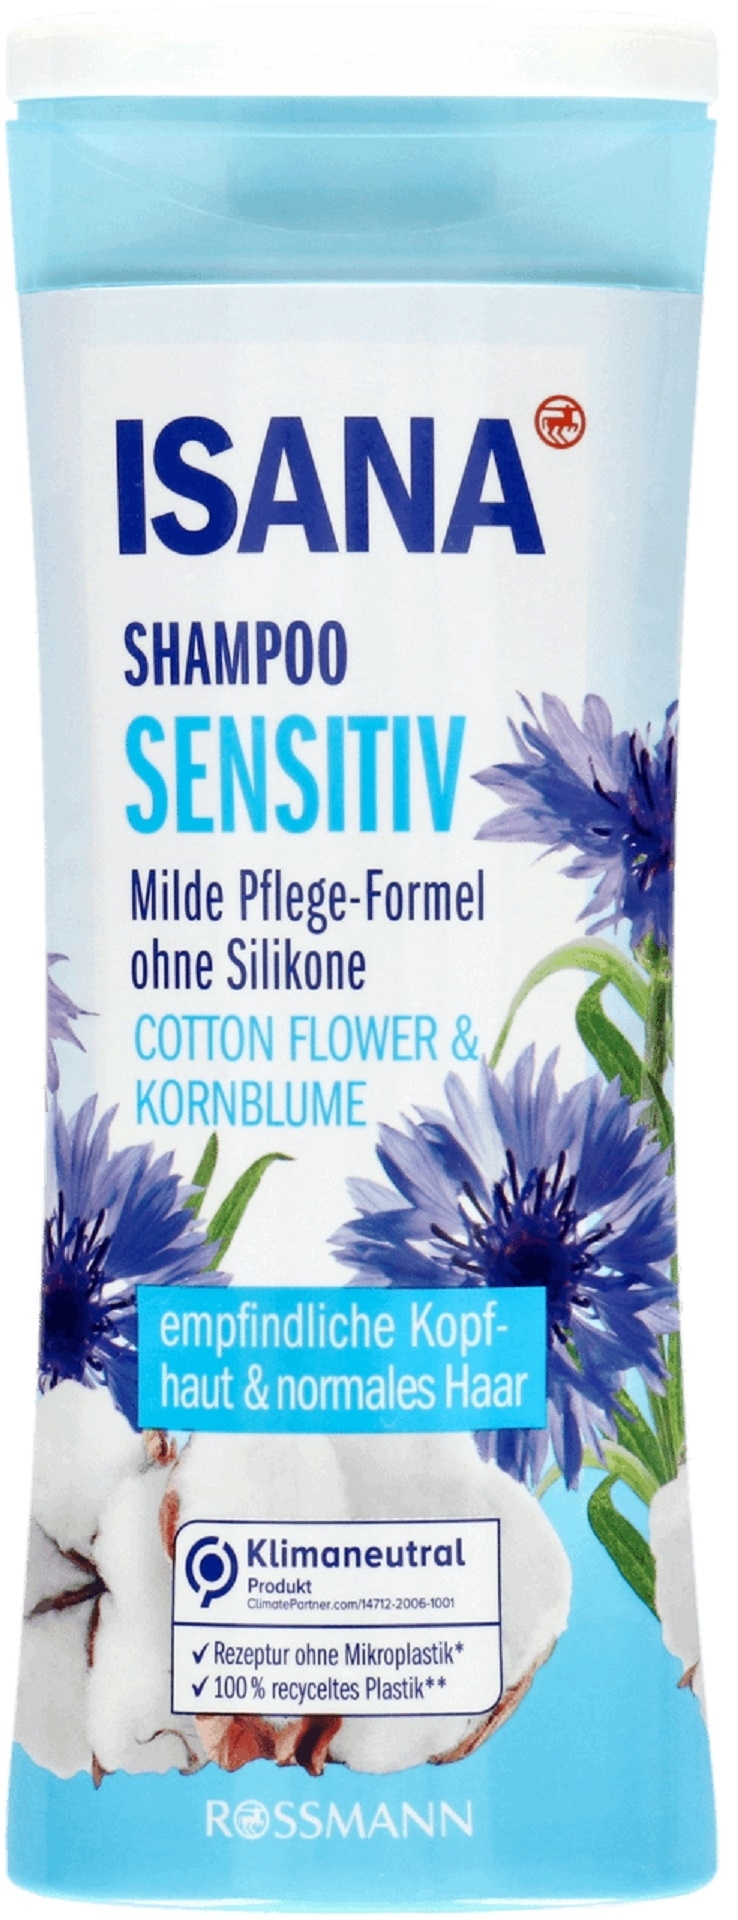 szampon isana sensitive